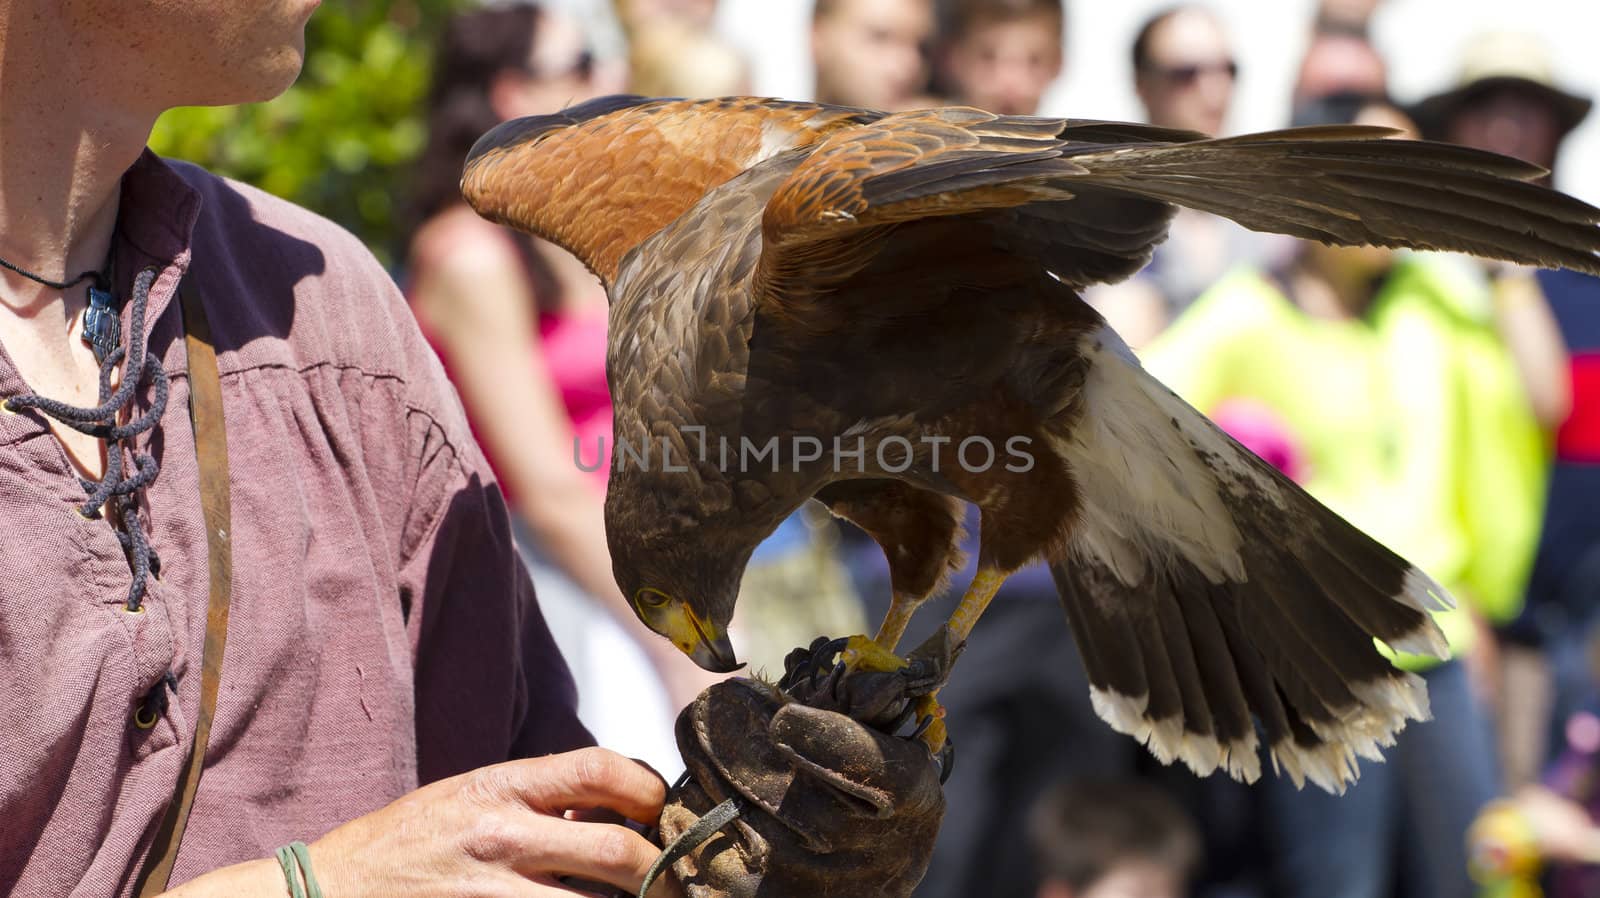 display of birds of prey, golden eagle